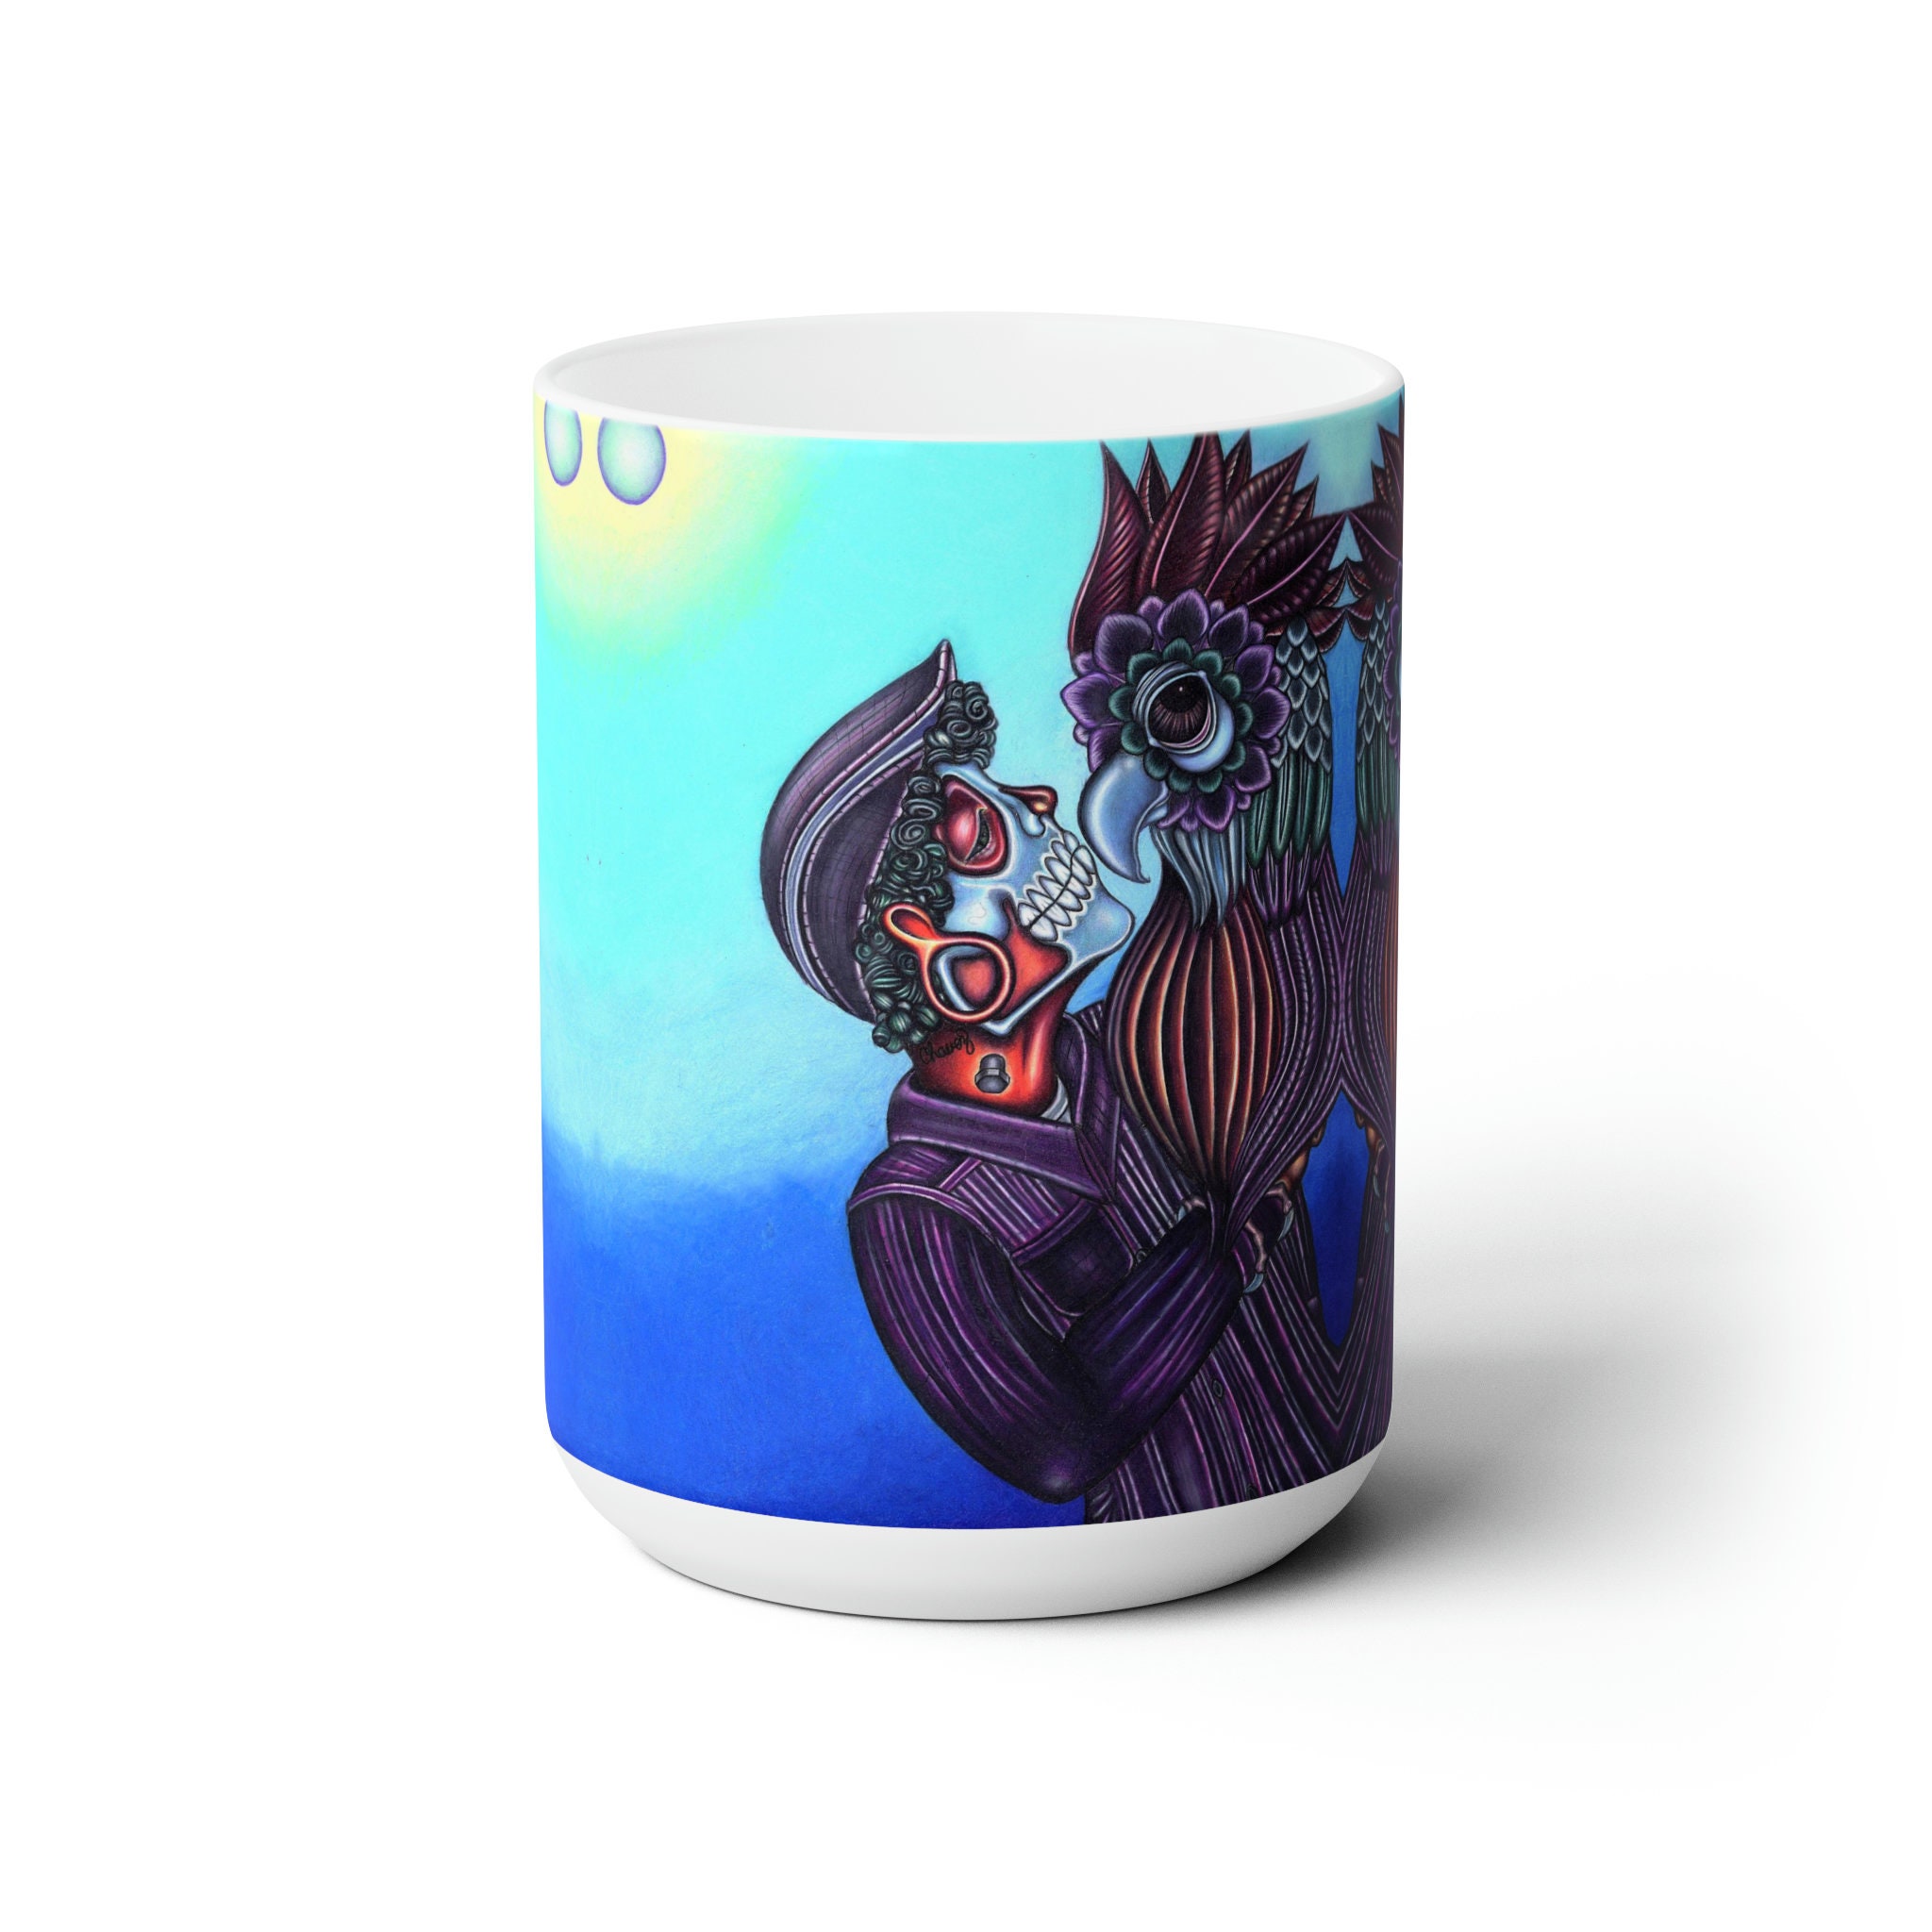 Bratz dolls aesthetic Coffee Mug for Sale by HelloGorgeous1